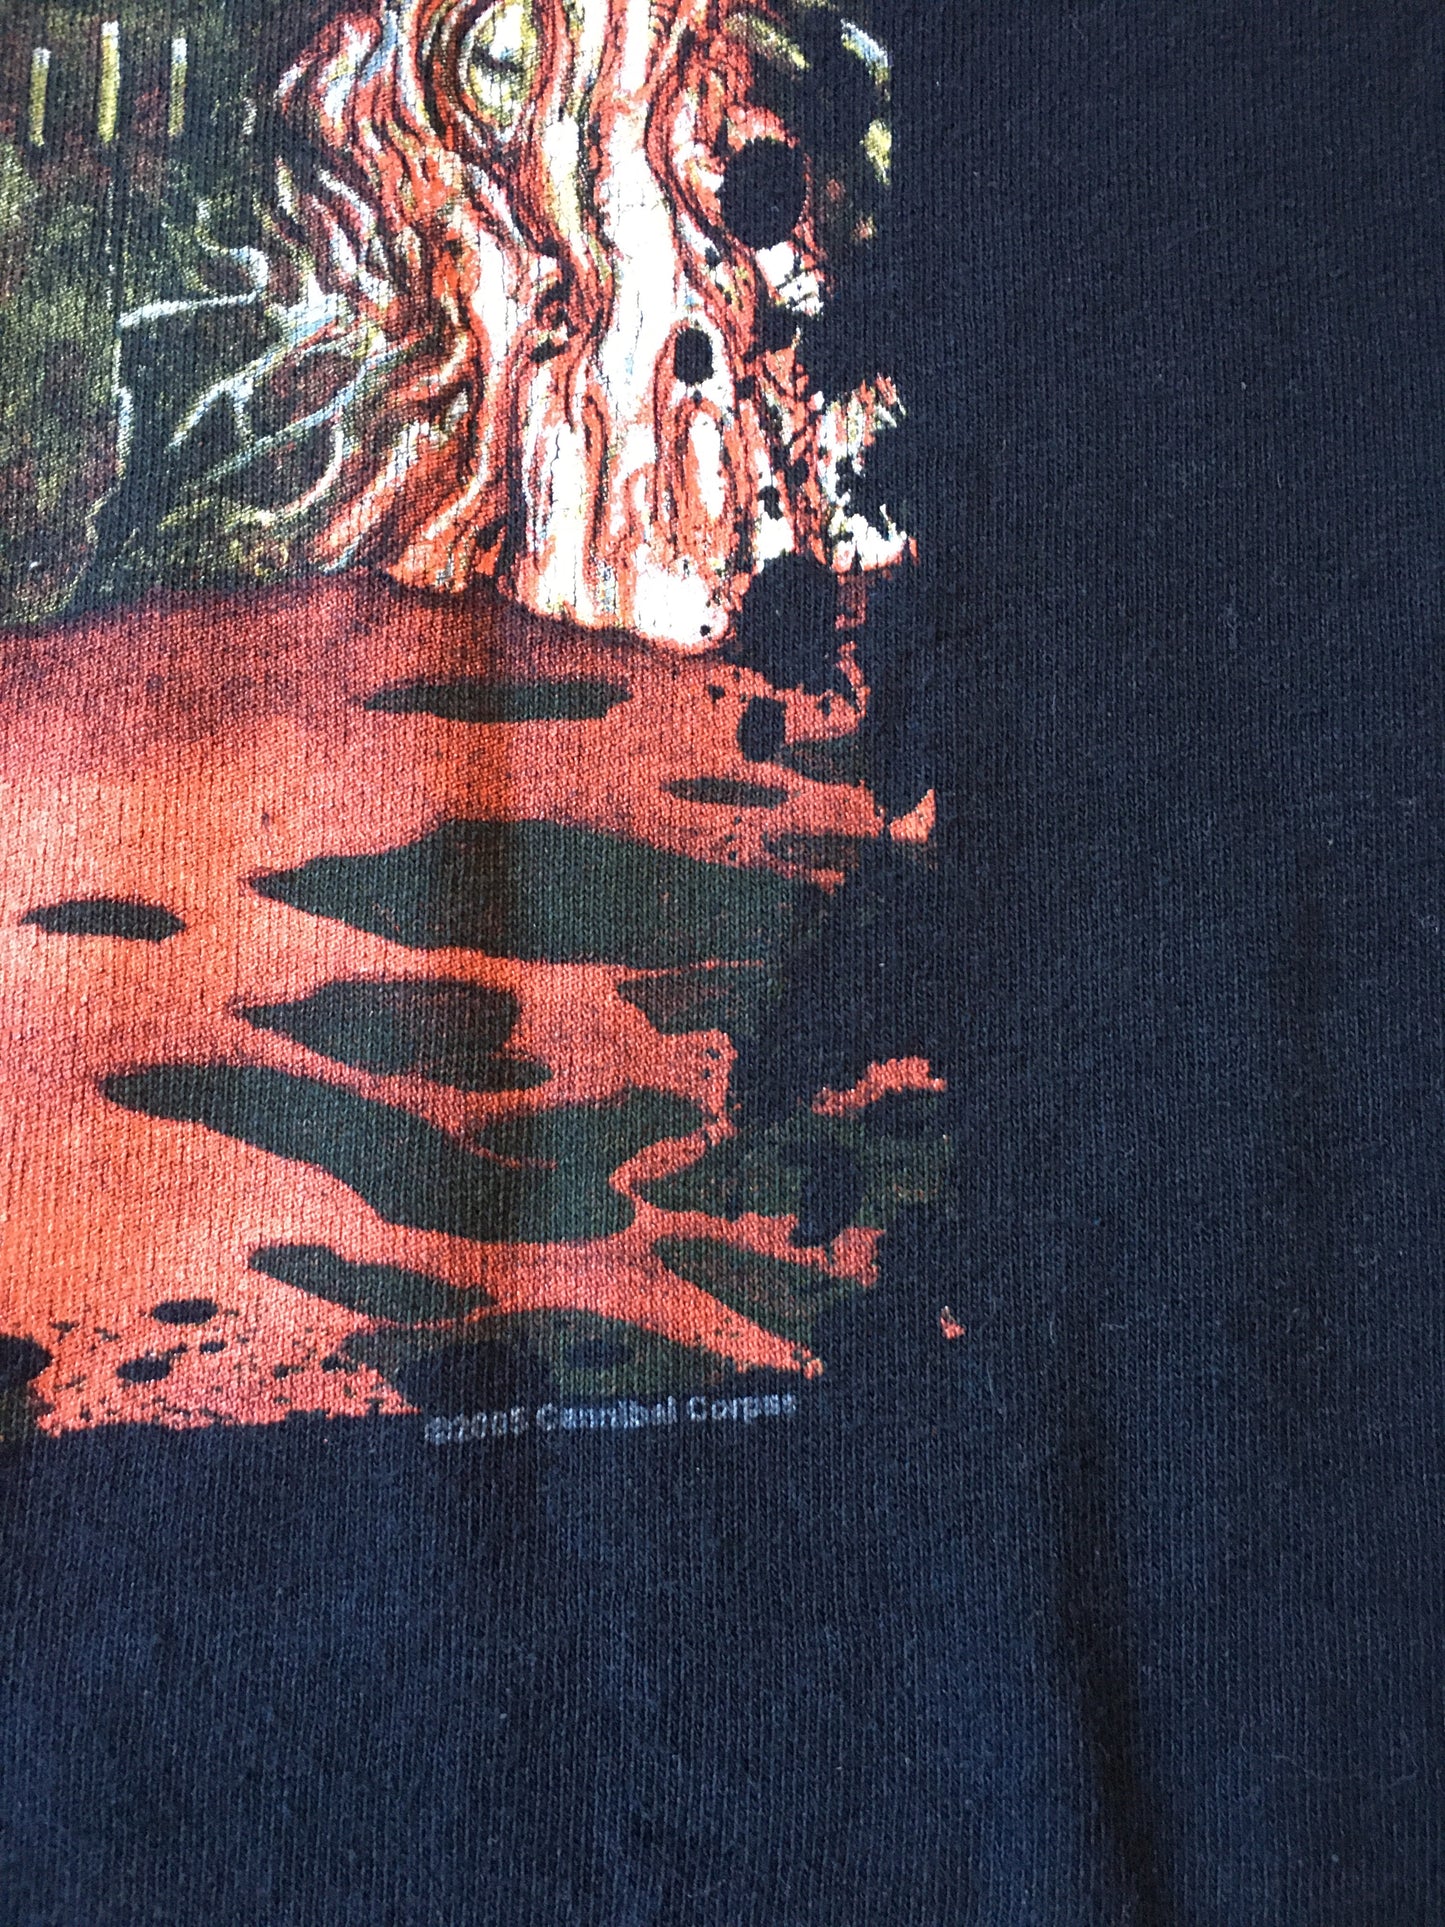 Cannibal Corpse 2005 15 Year Killing Spree T-Shirt